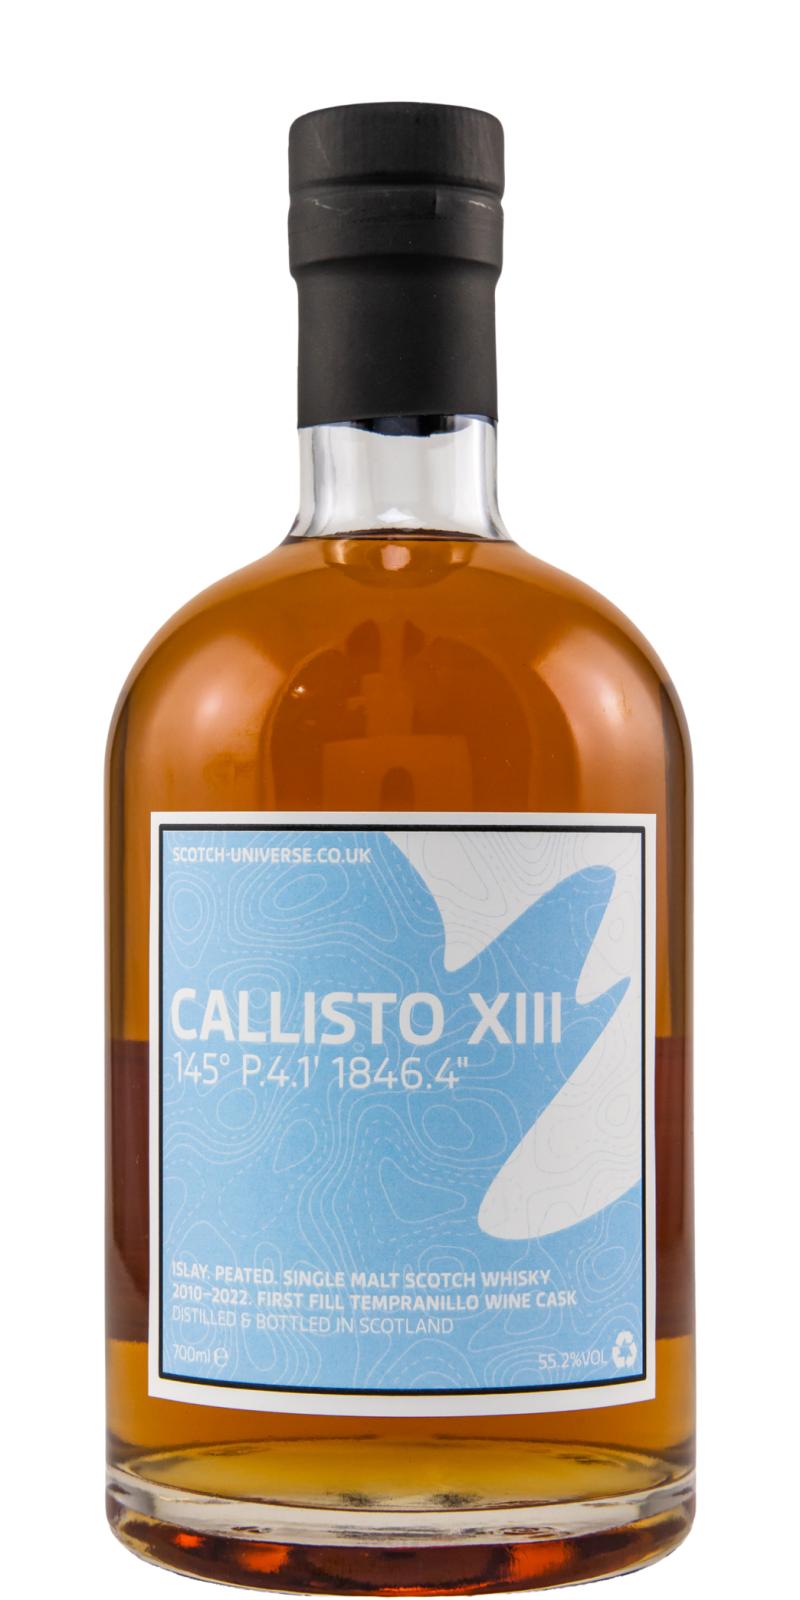 Scotch Universe Callisto XIII 145 P.4.1 1846.4 1st Fill Tempranillo Wine Cask 55.2% 700ml